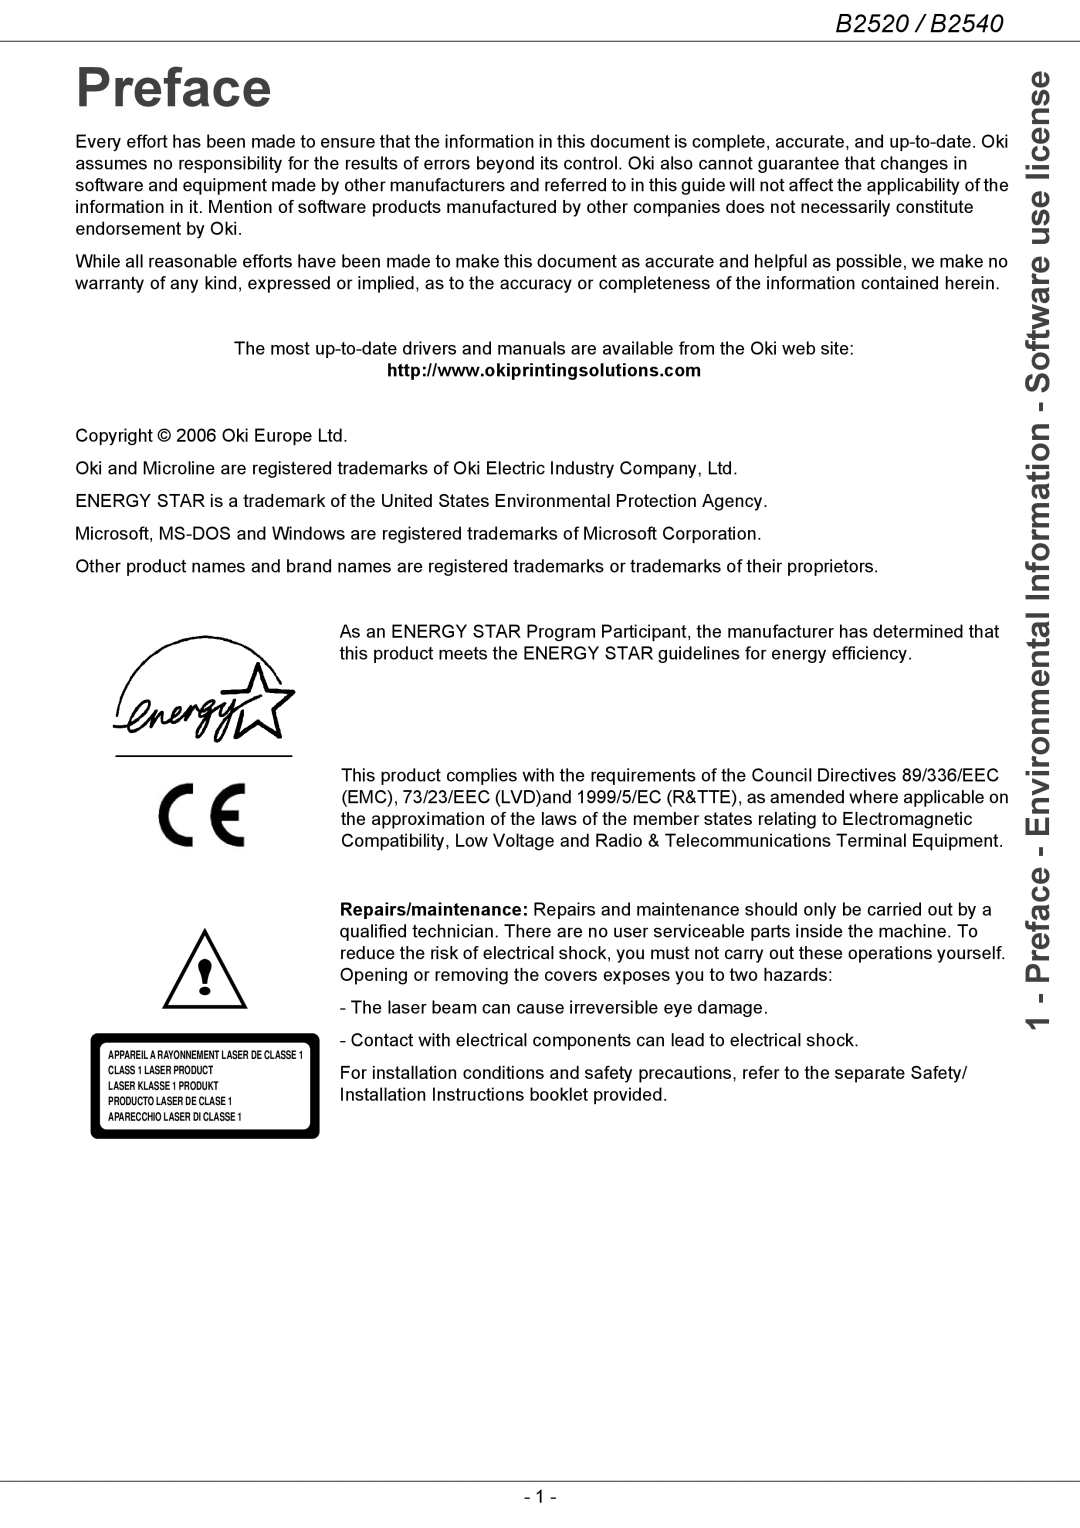 Oki B2500 Series manual Information - Software use license, Preface - Environmental, B2520 / B2540 